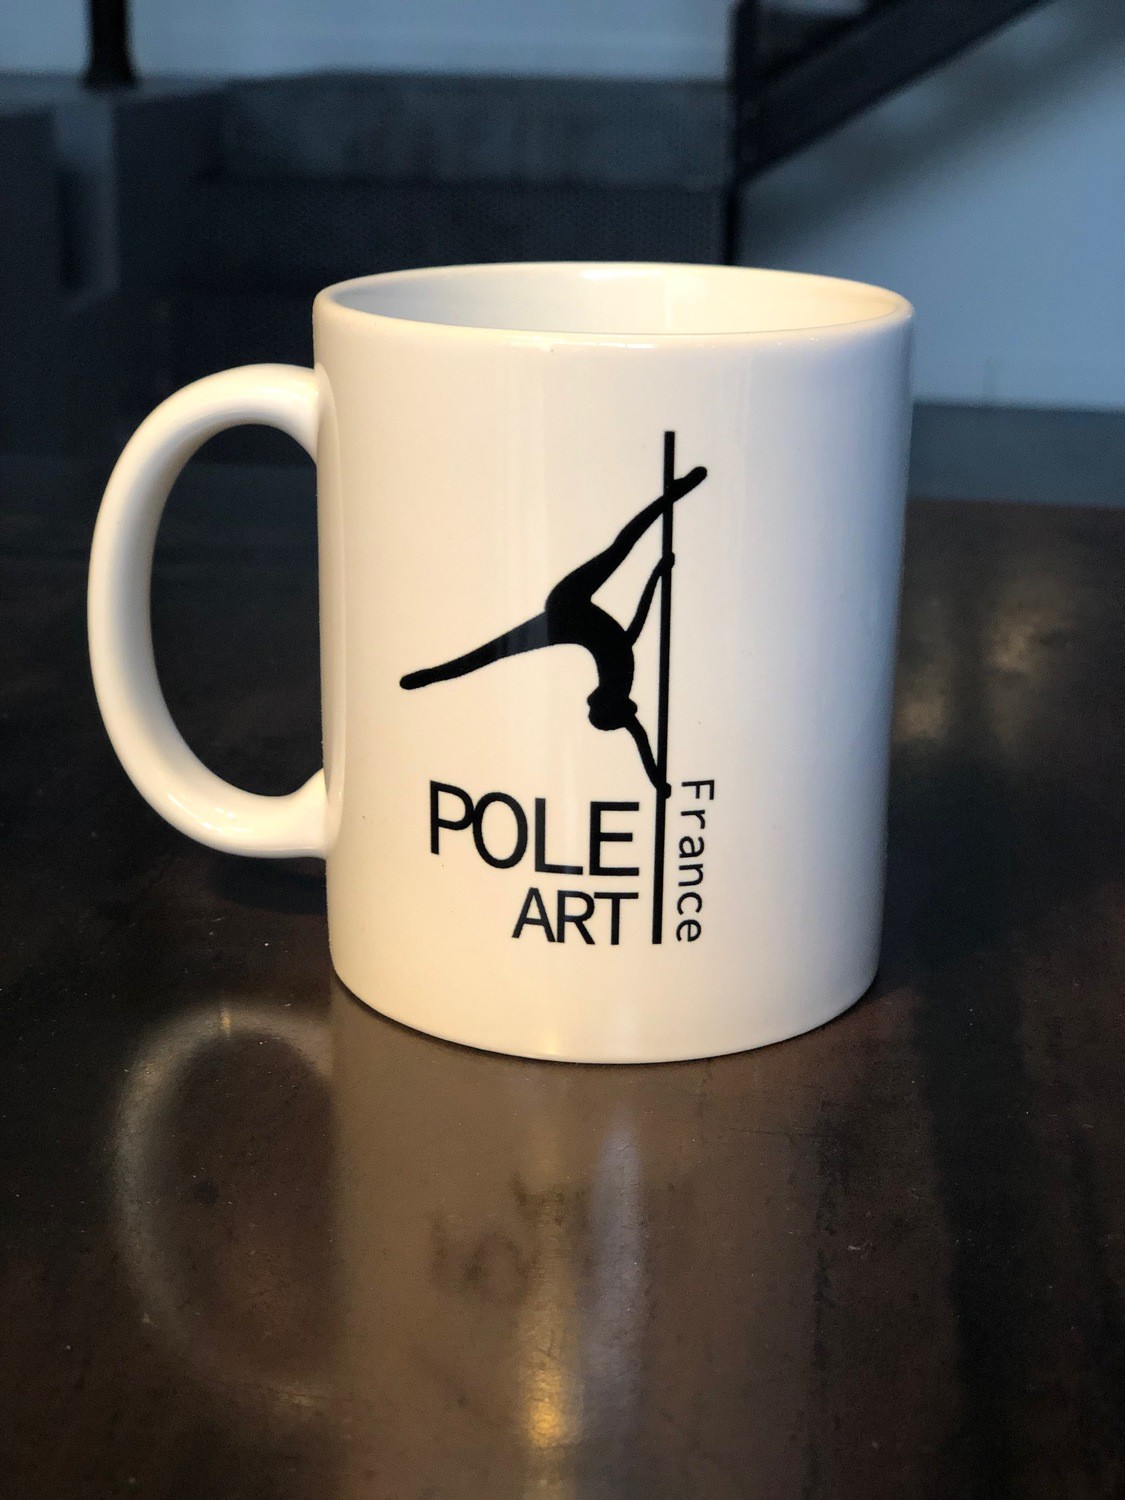 Tasse Pole Art France / Pole Art France mug - BLACK